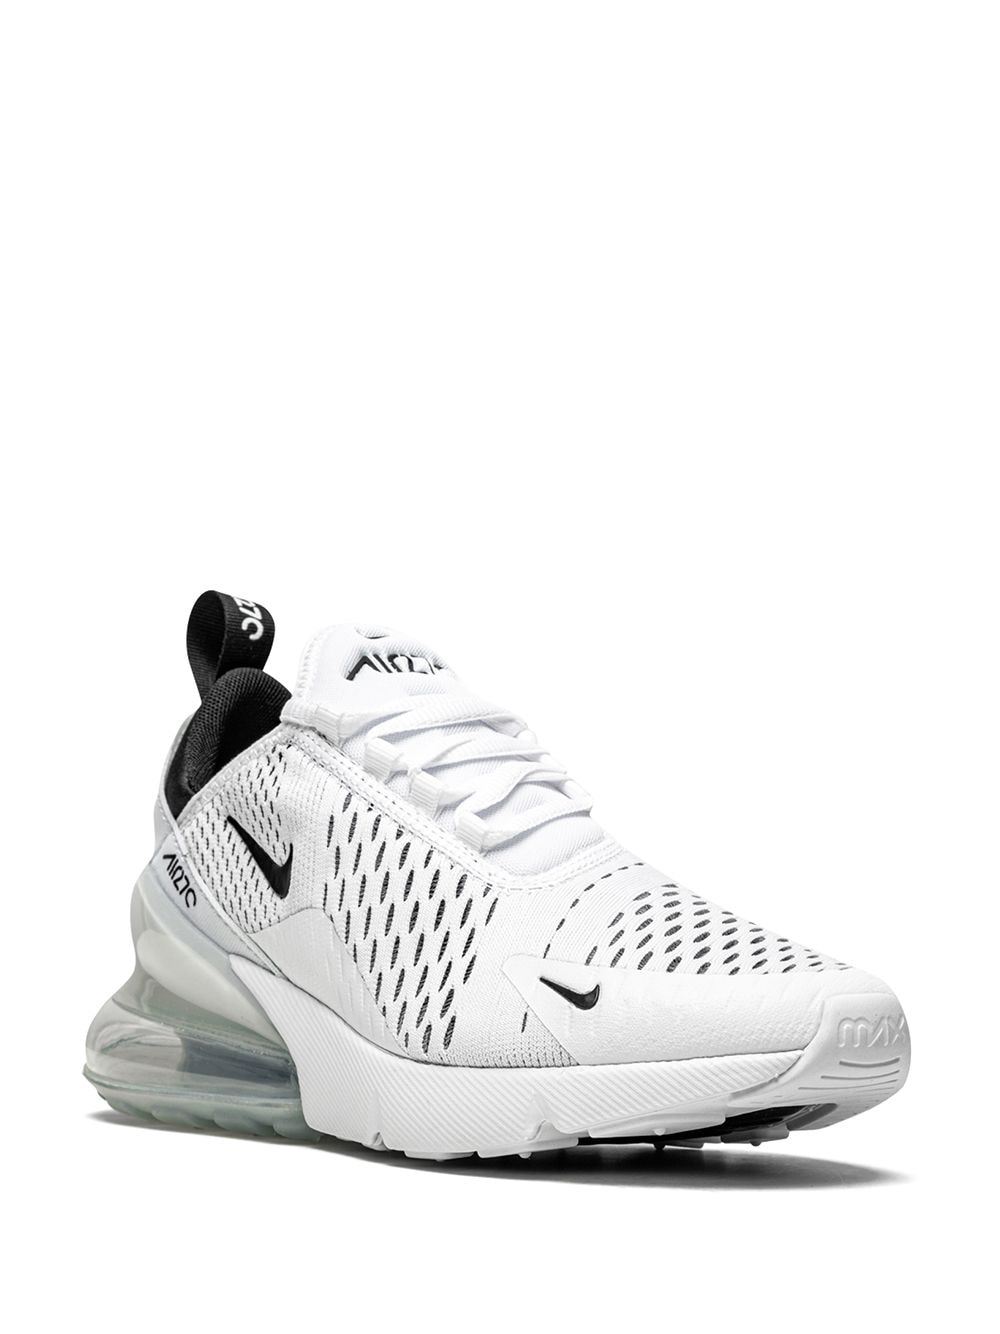 Image 2 of Nike Air Max 270 "White/Black" sneakers